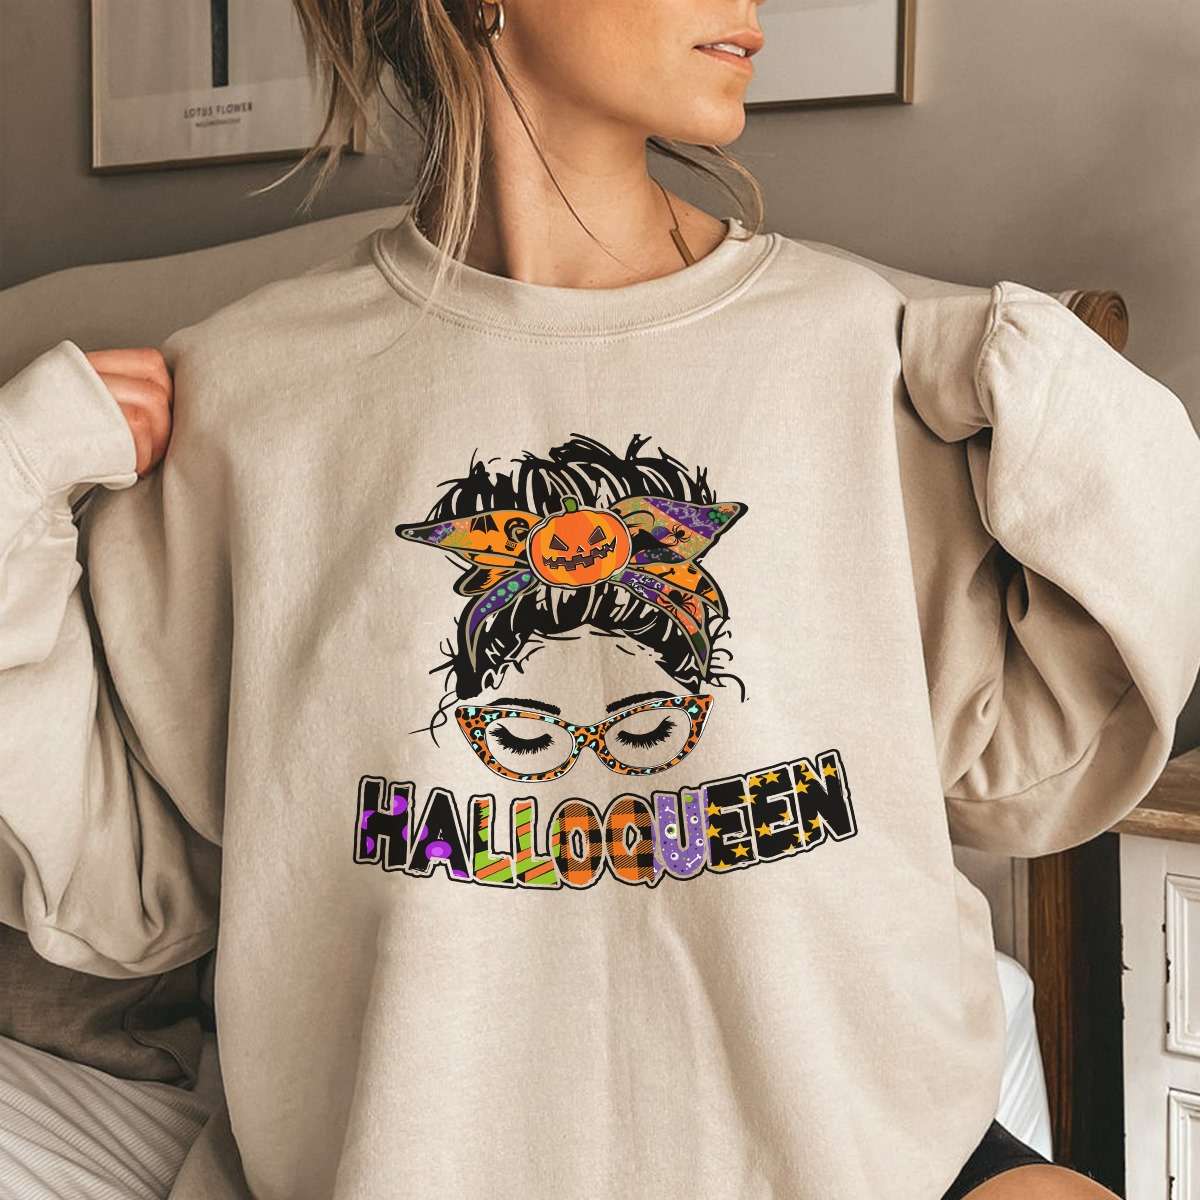 Halloween girl - Spooky vibe shirt, Halloween gift for girls